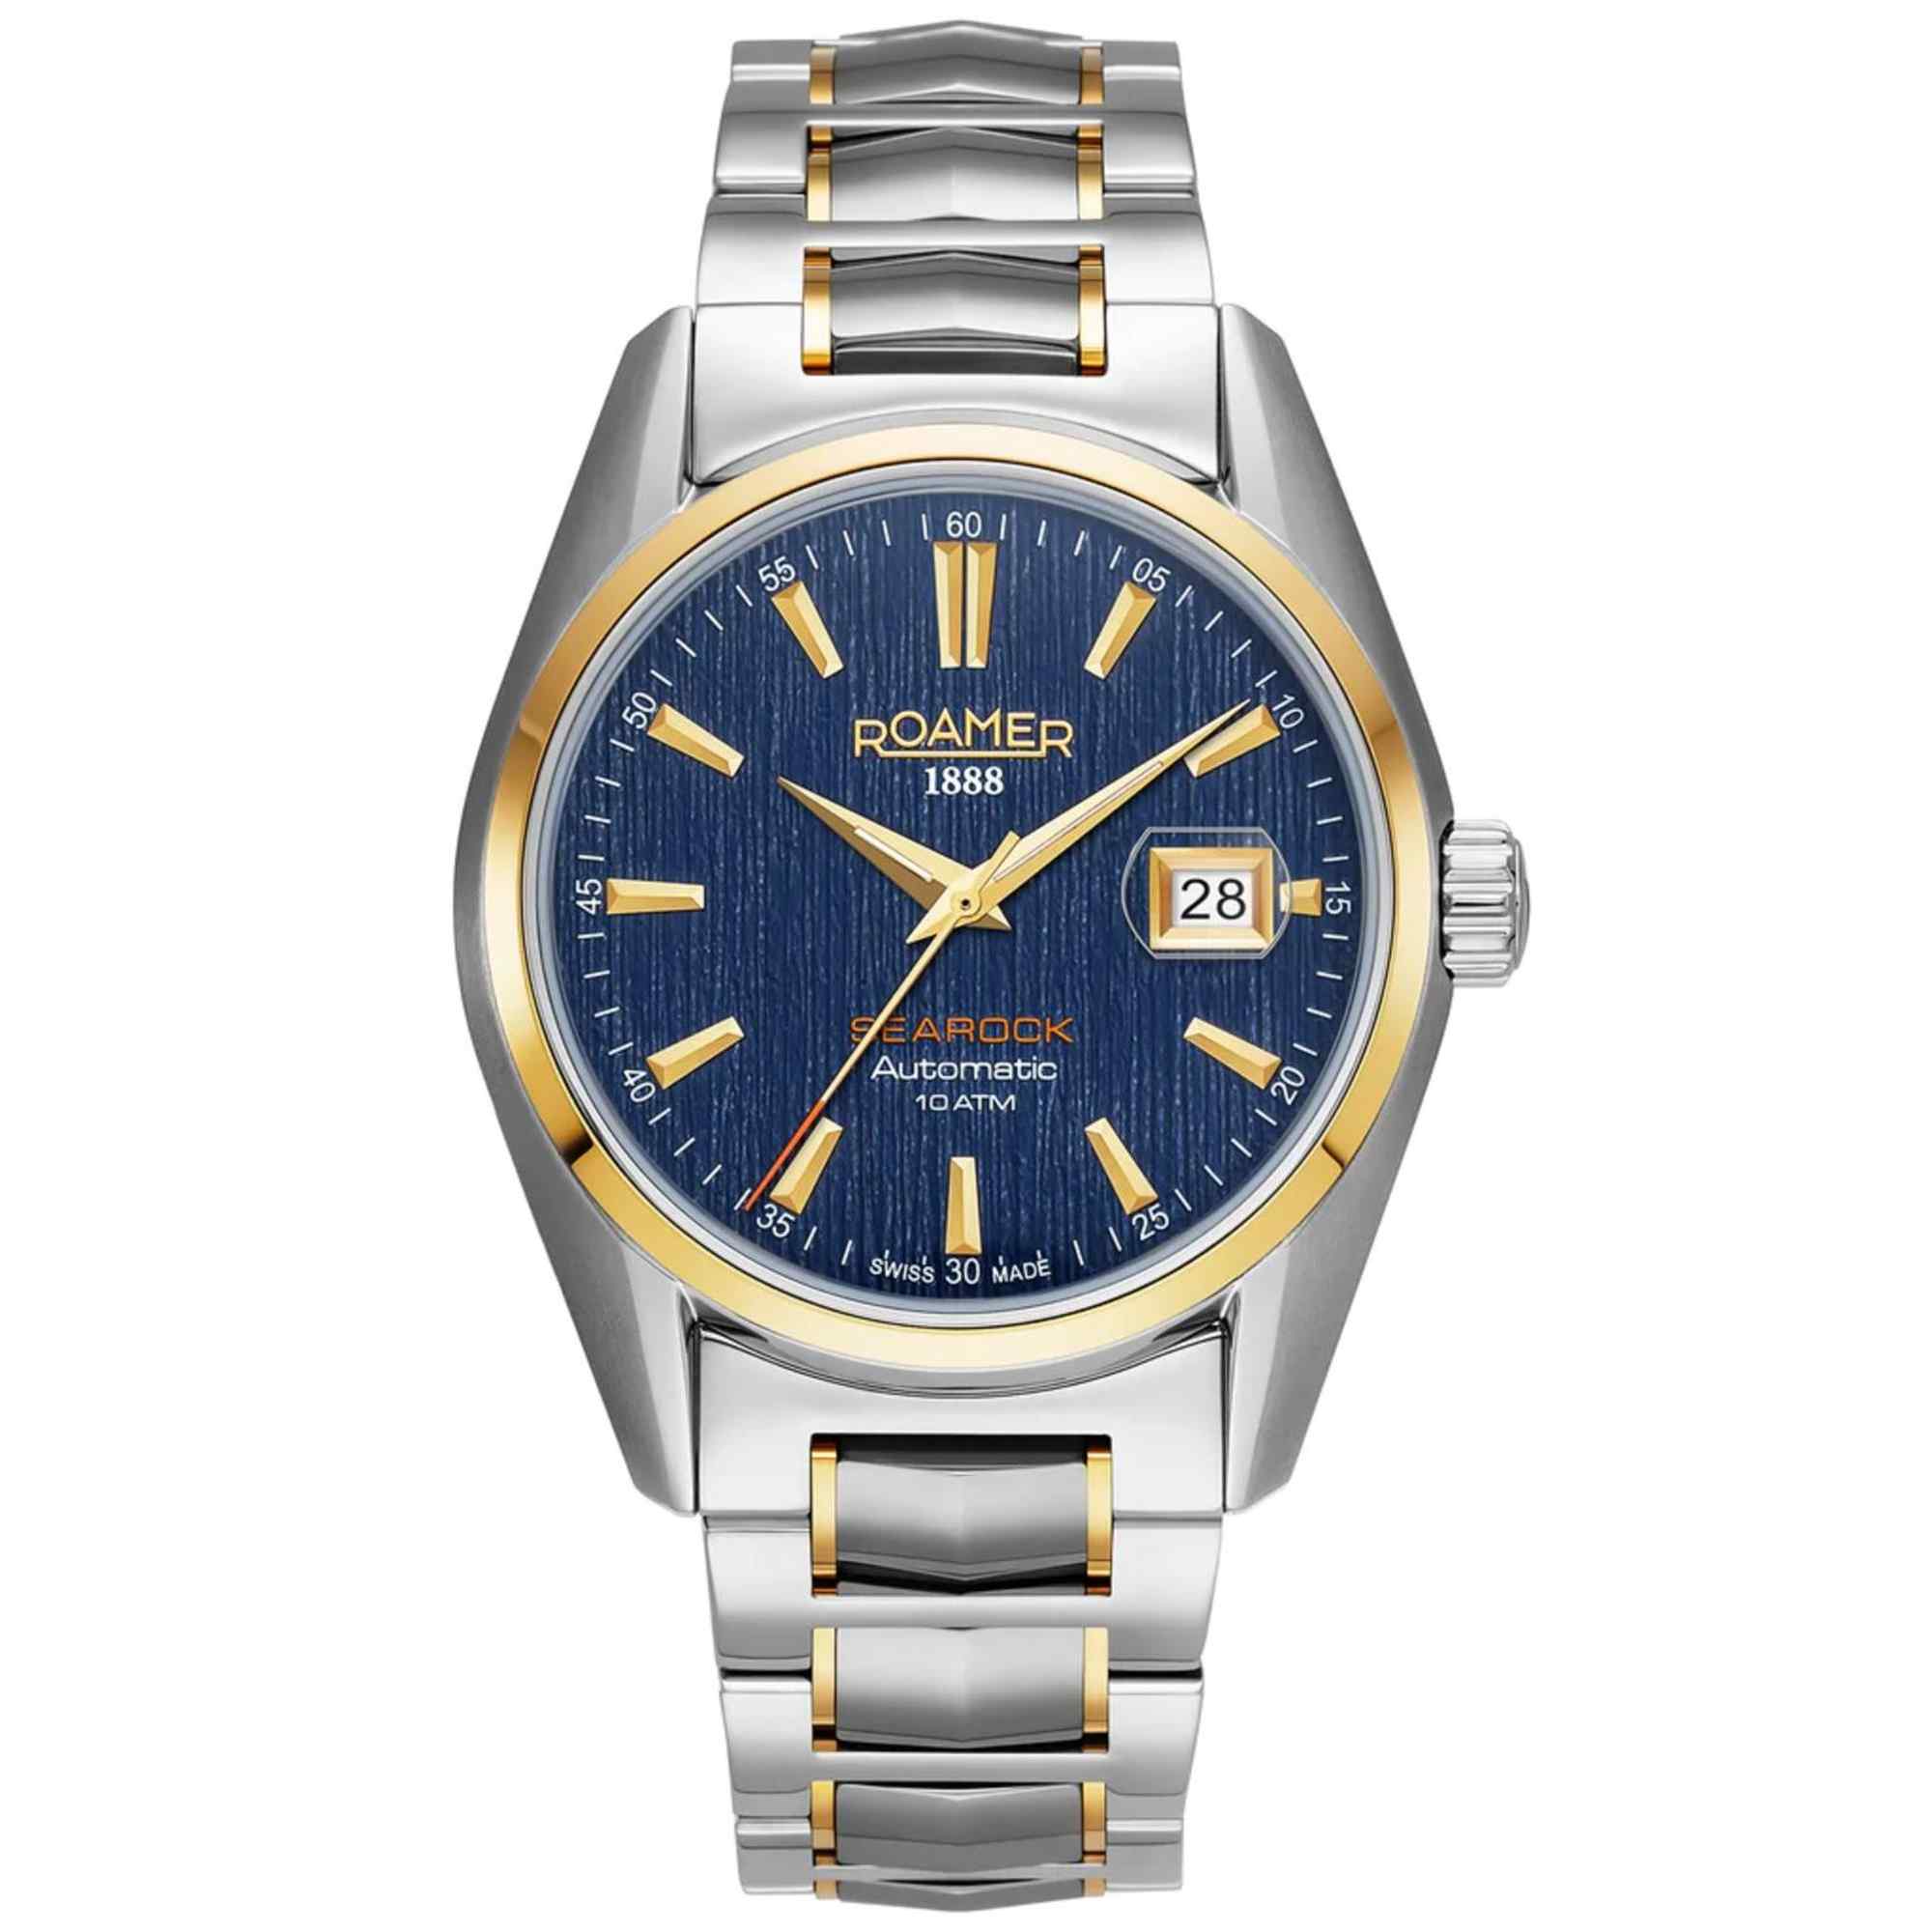 Photos - Wrist Watch Roamer 210665 47 45 20 Searock Automatic Blue Dial Wristwatch 